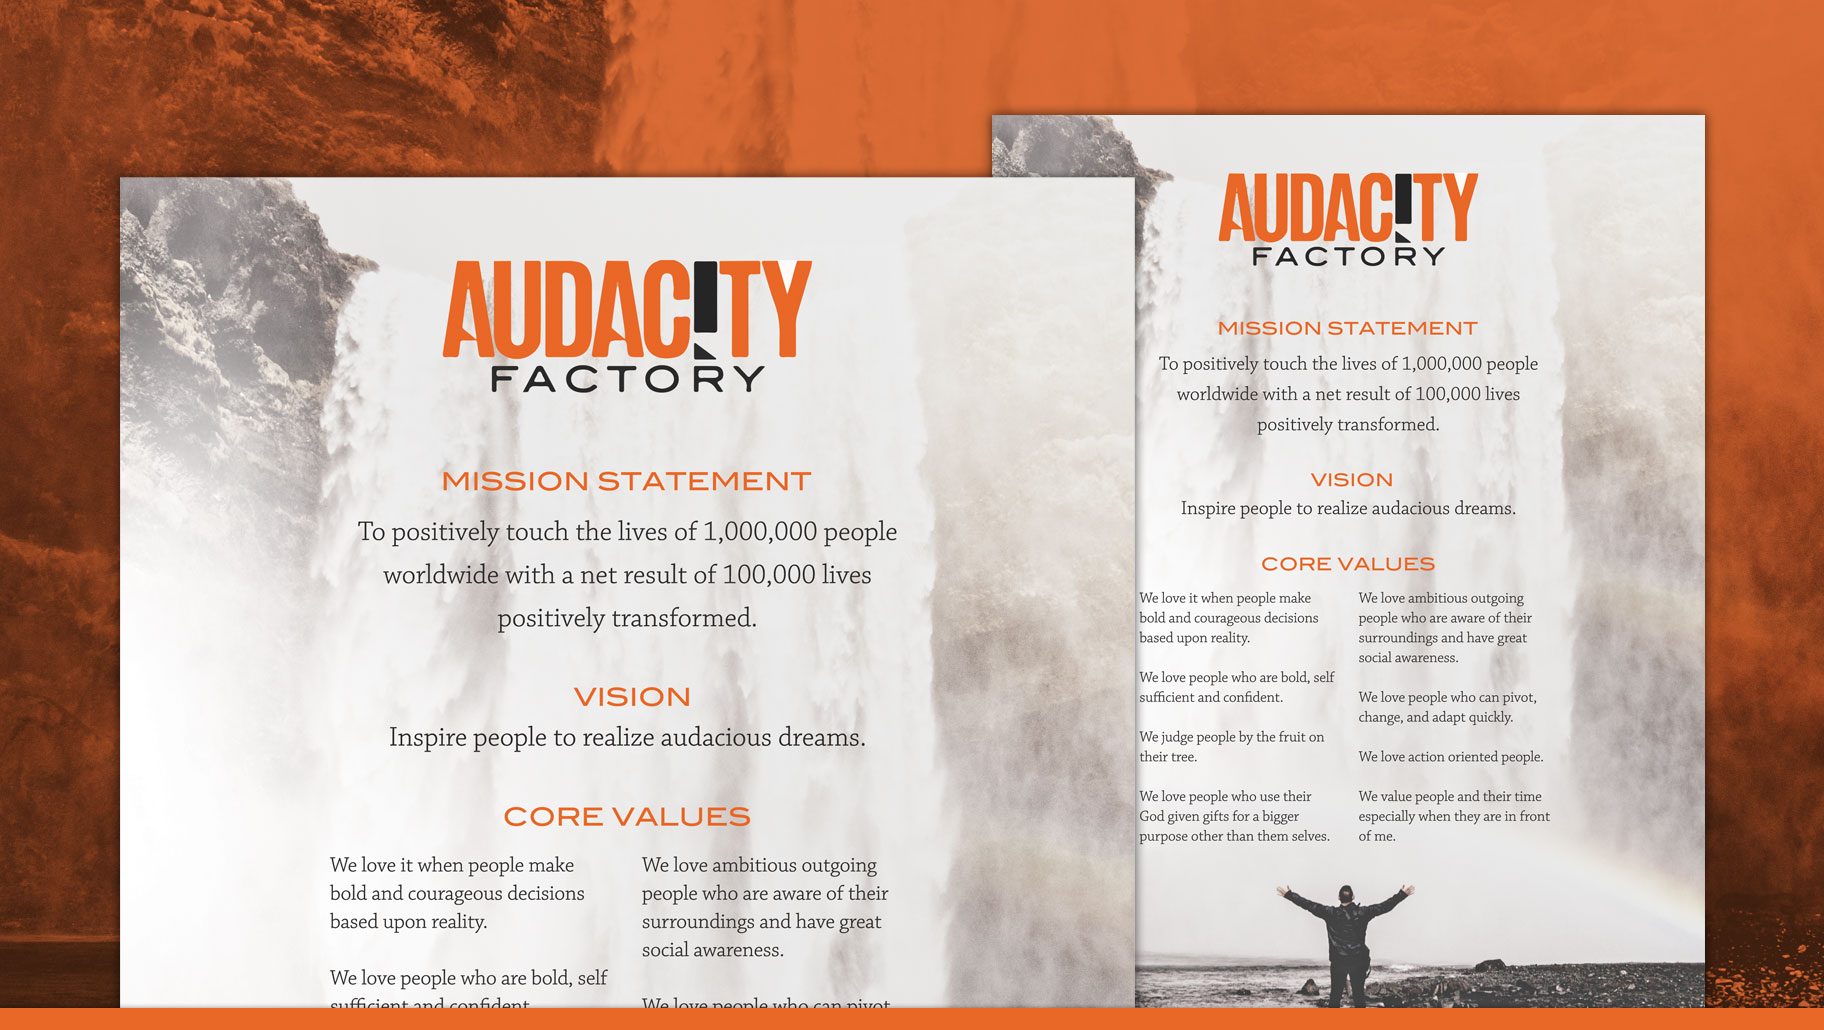 Audacity Factory